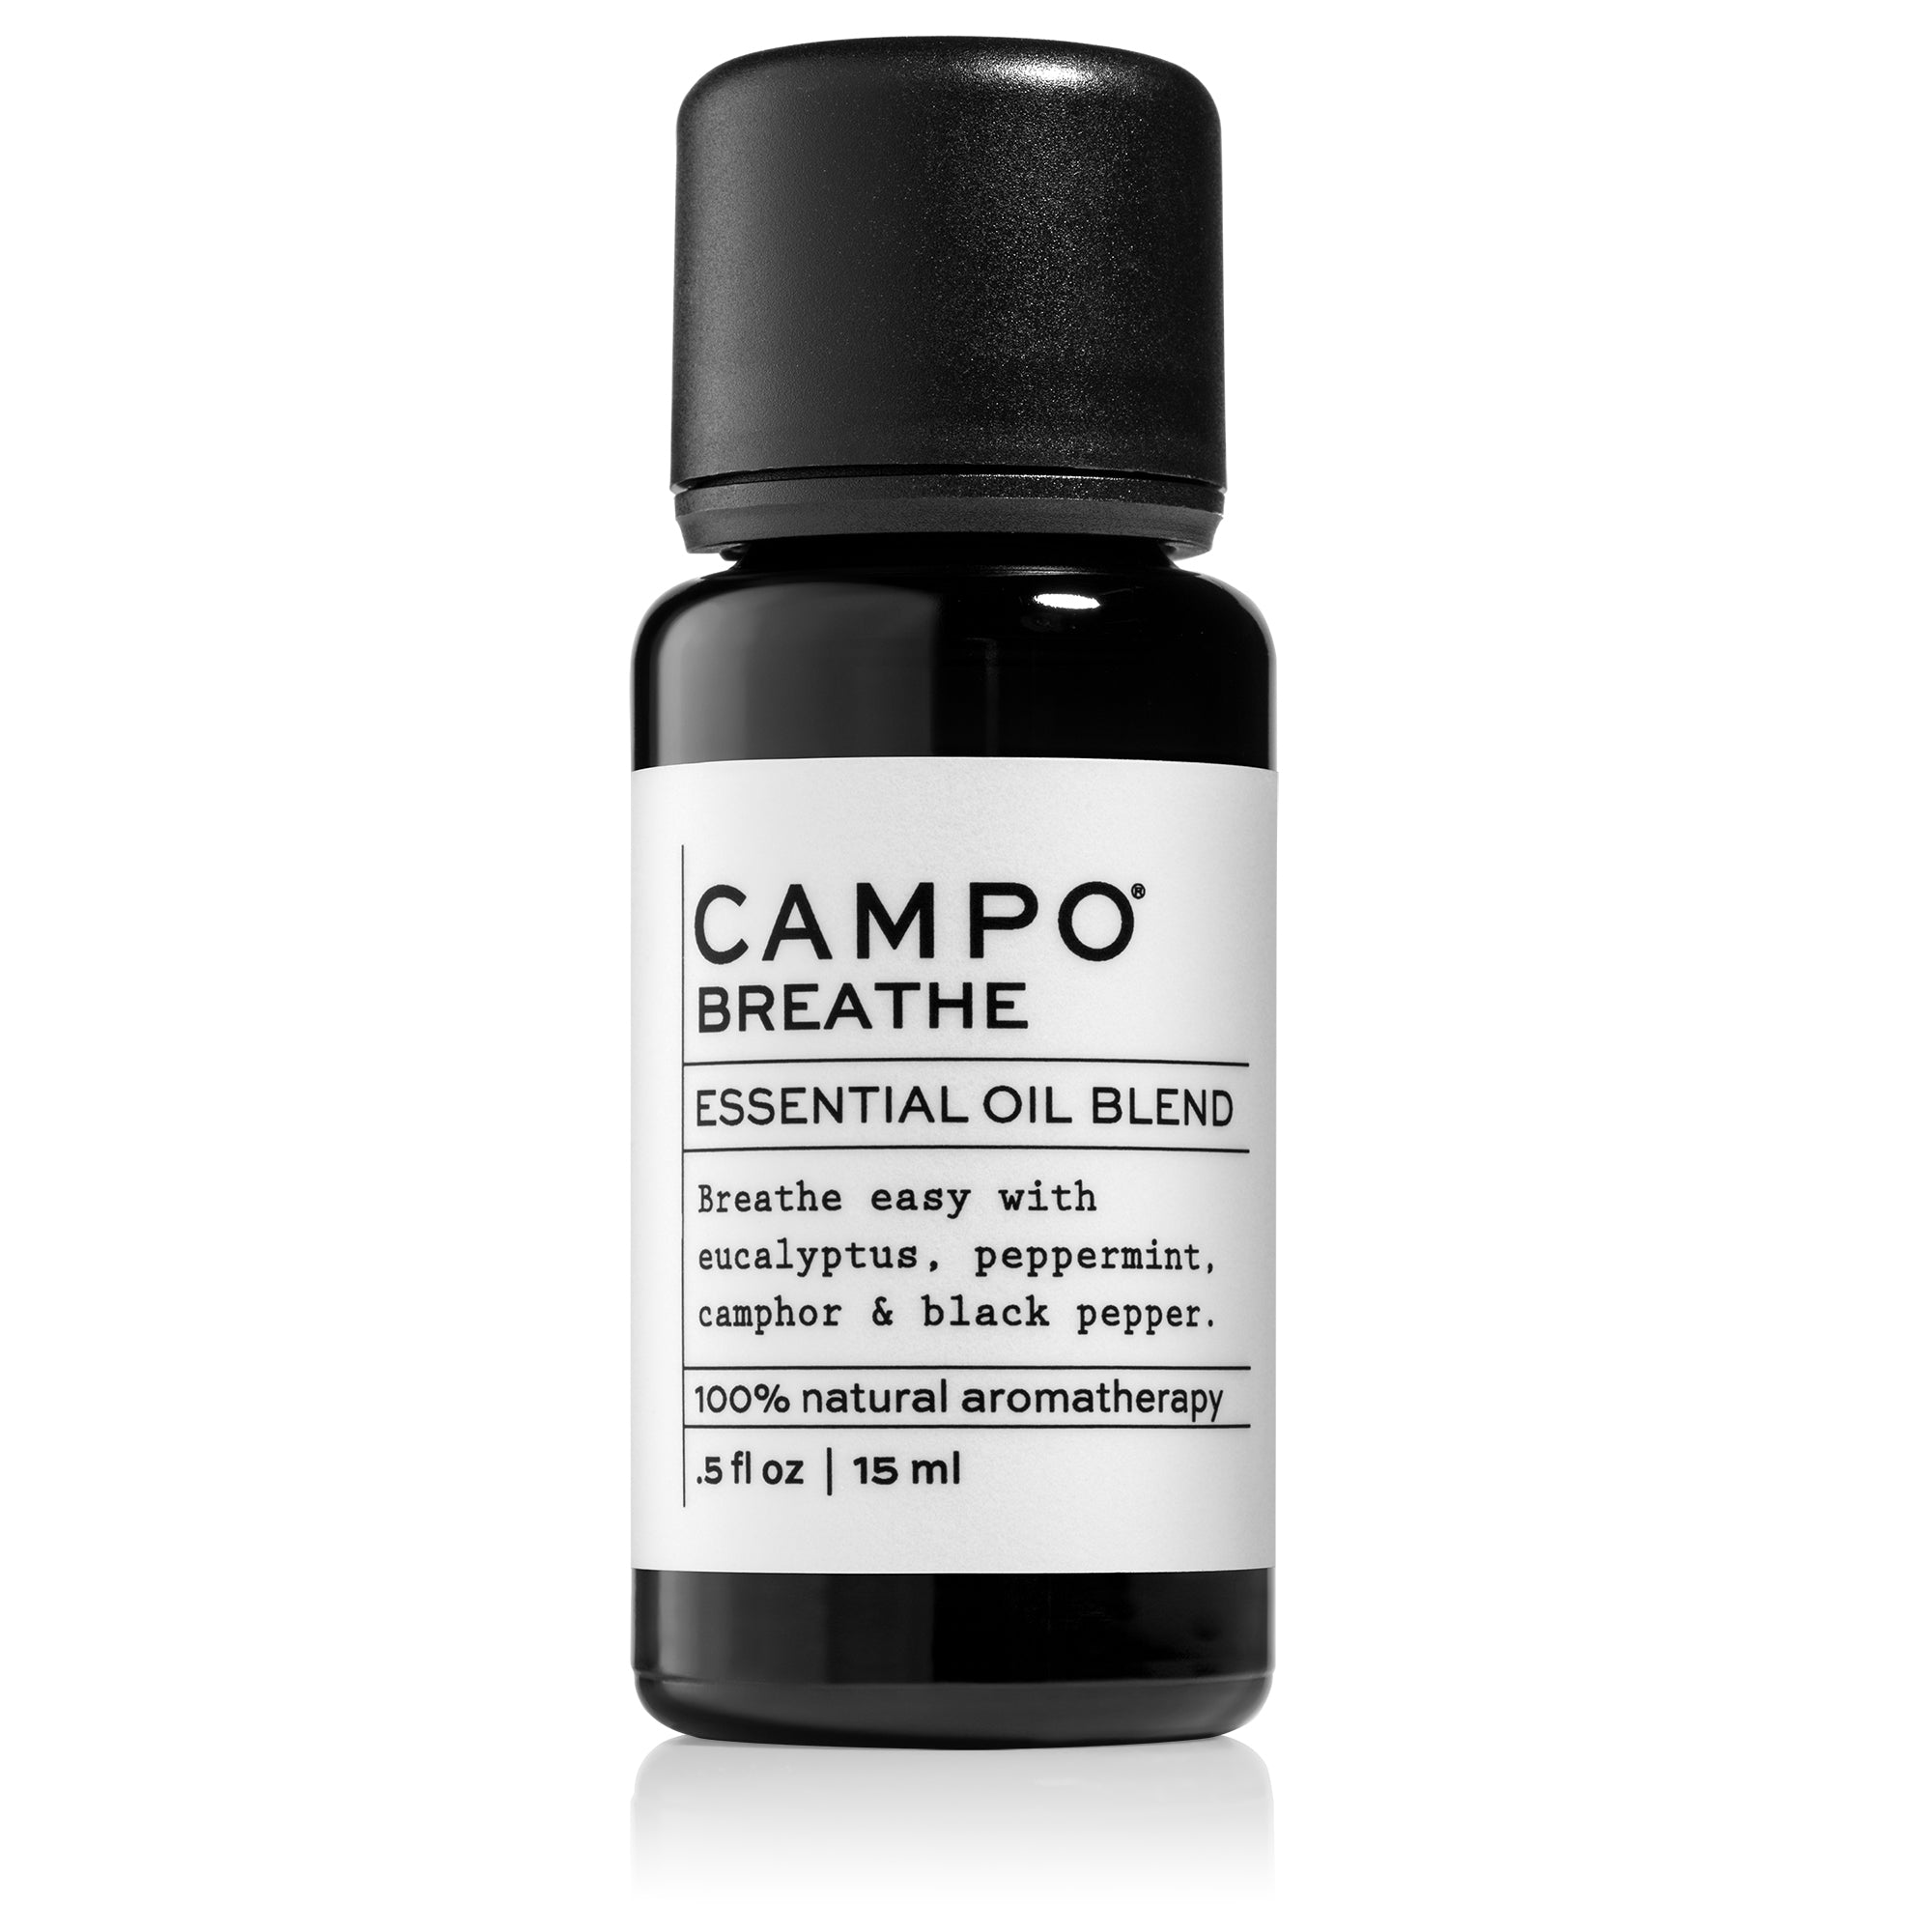 Campo Beauty, Essential Oil BREATHE Blend 15 ml Breathe easy with this 100% pure essential oil blend of Eucalyptus, Peppermint, Camphor & Black Pepper.